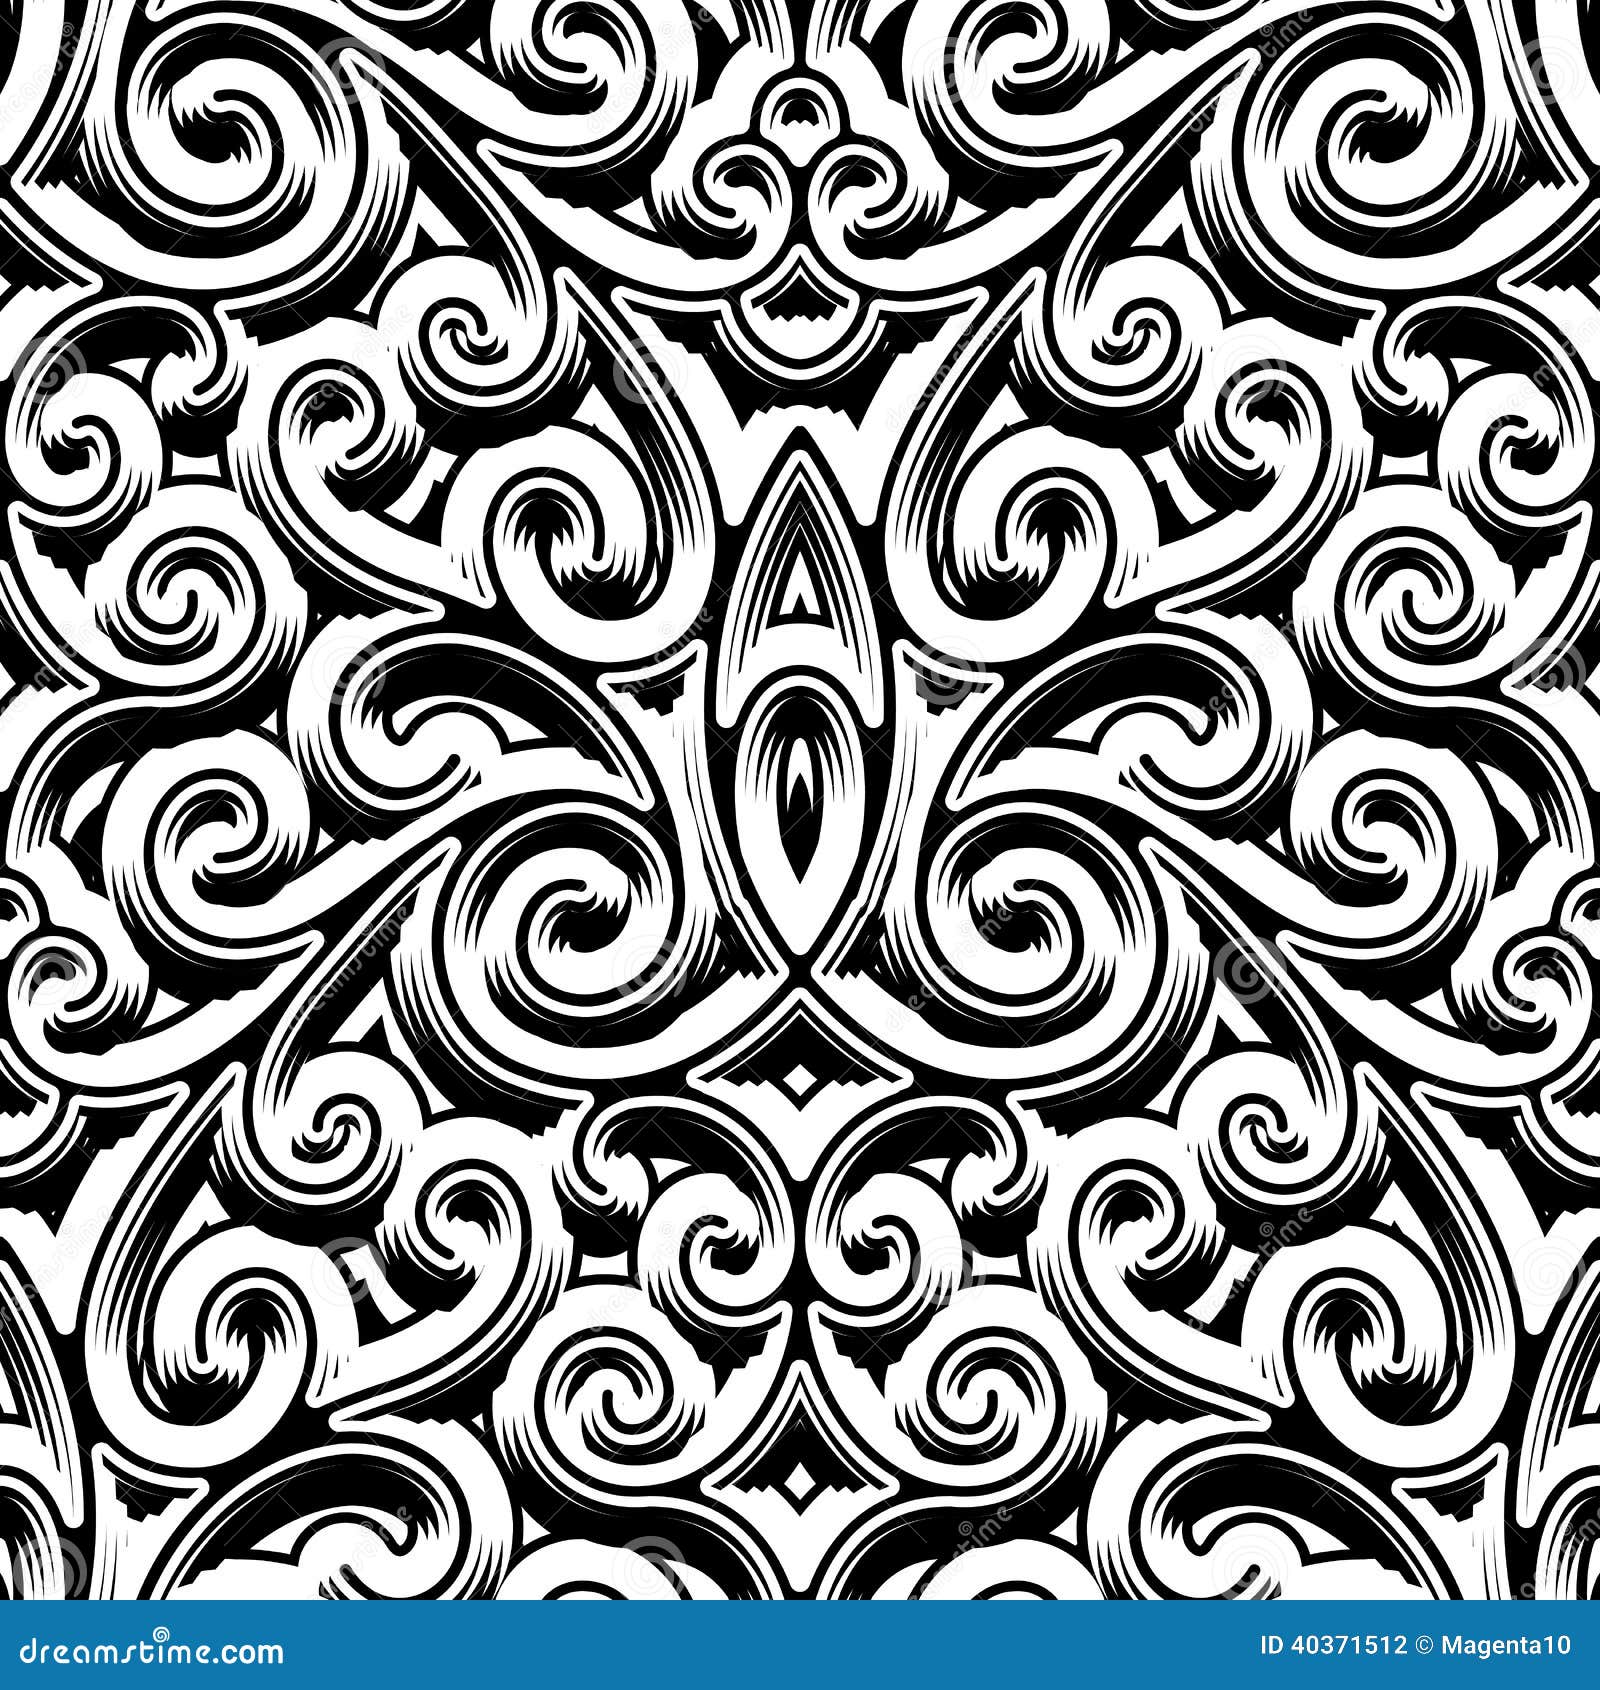 vintage swirly pattern